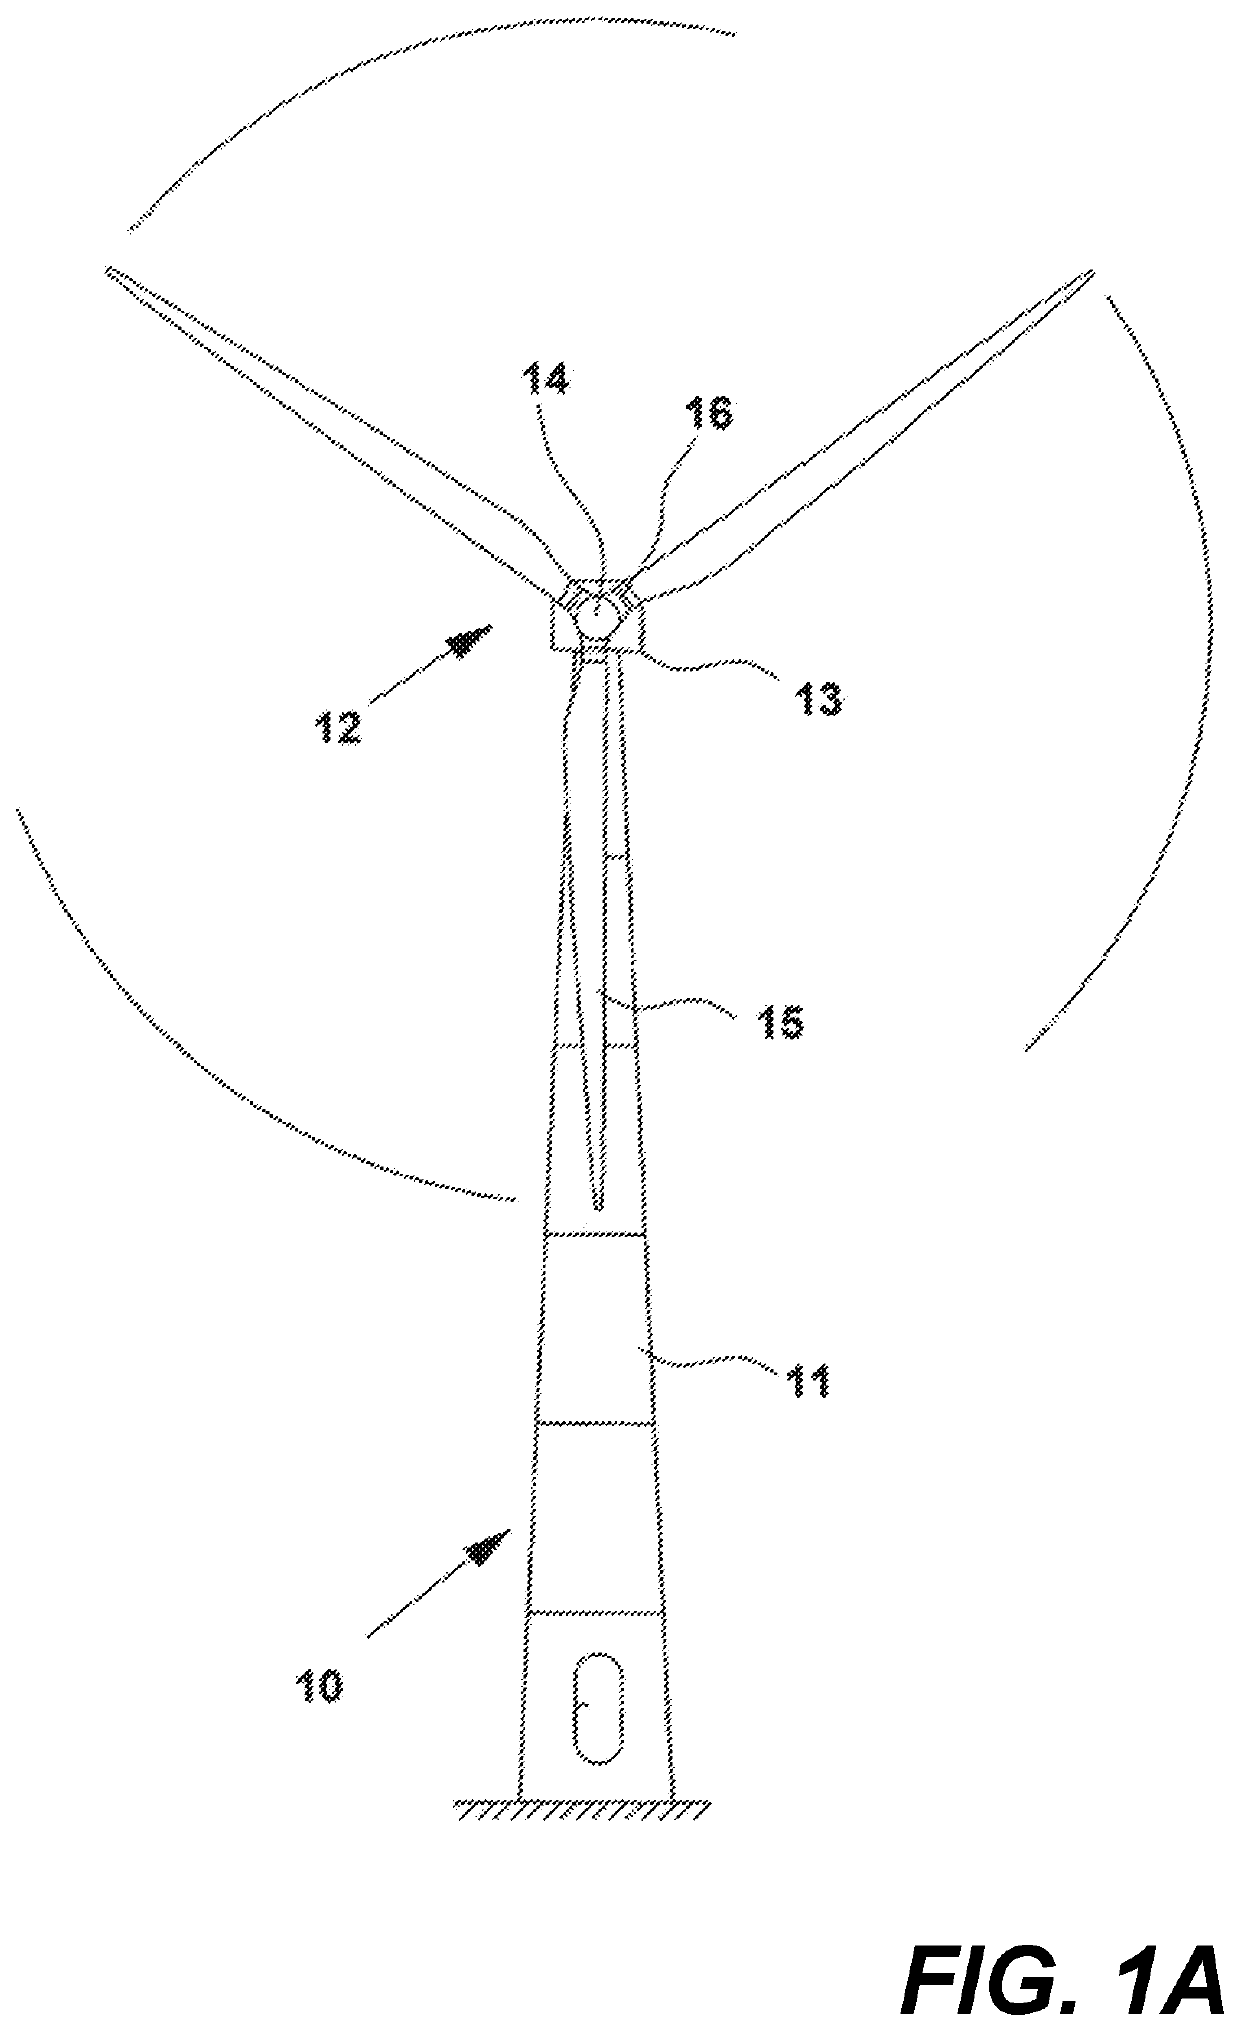 Predicting wind turbine noise